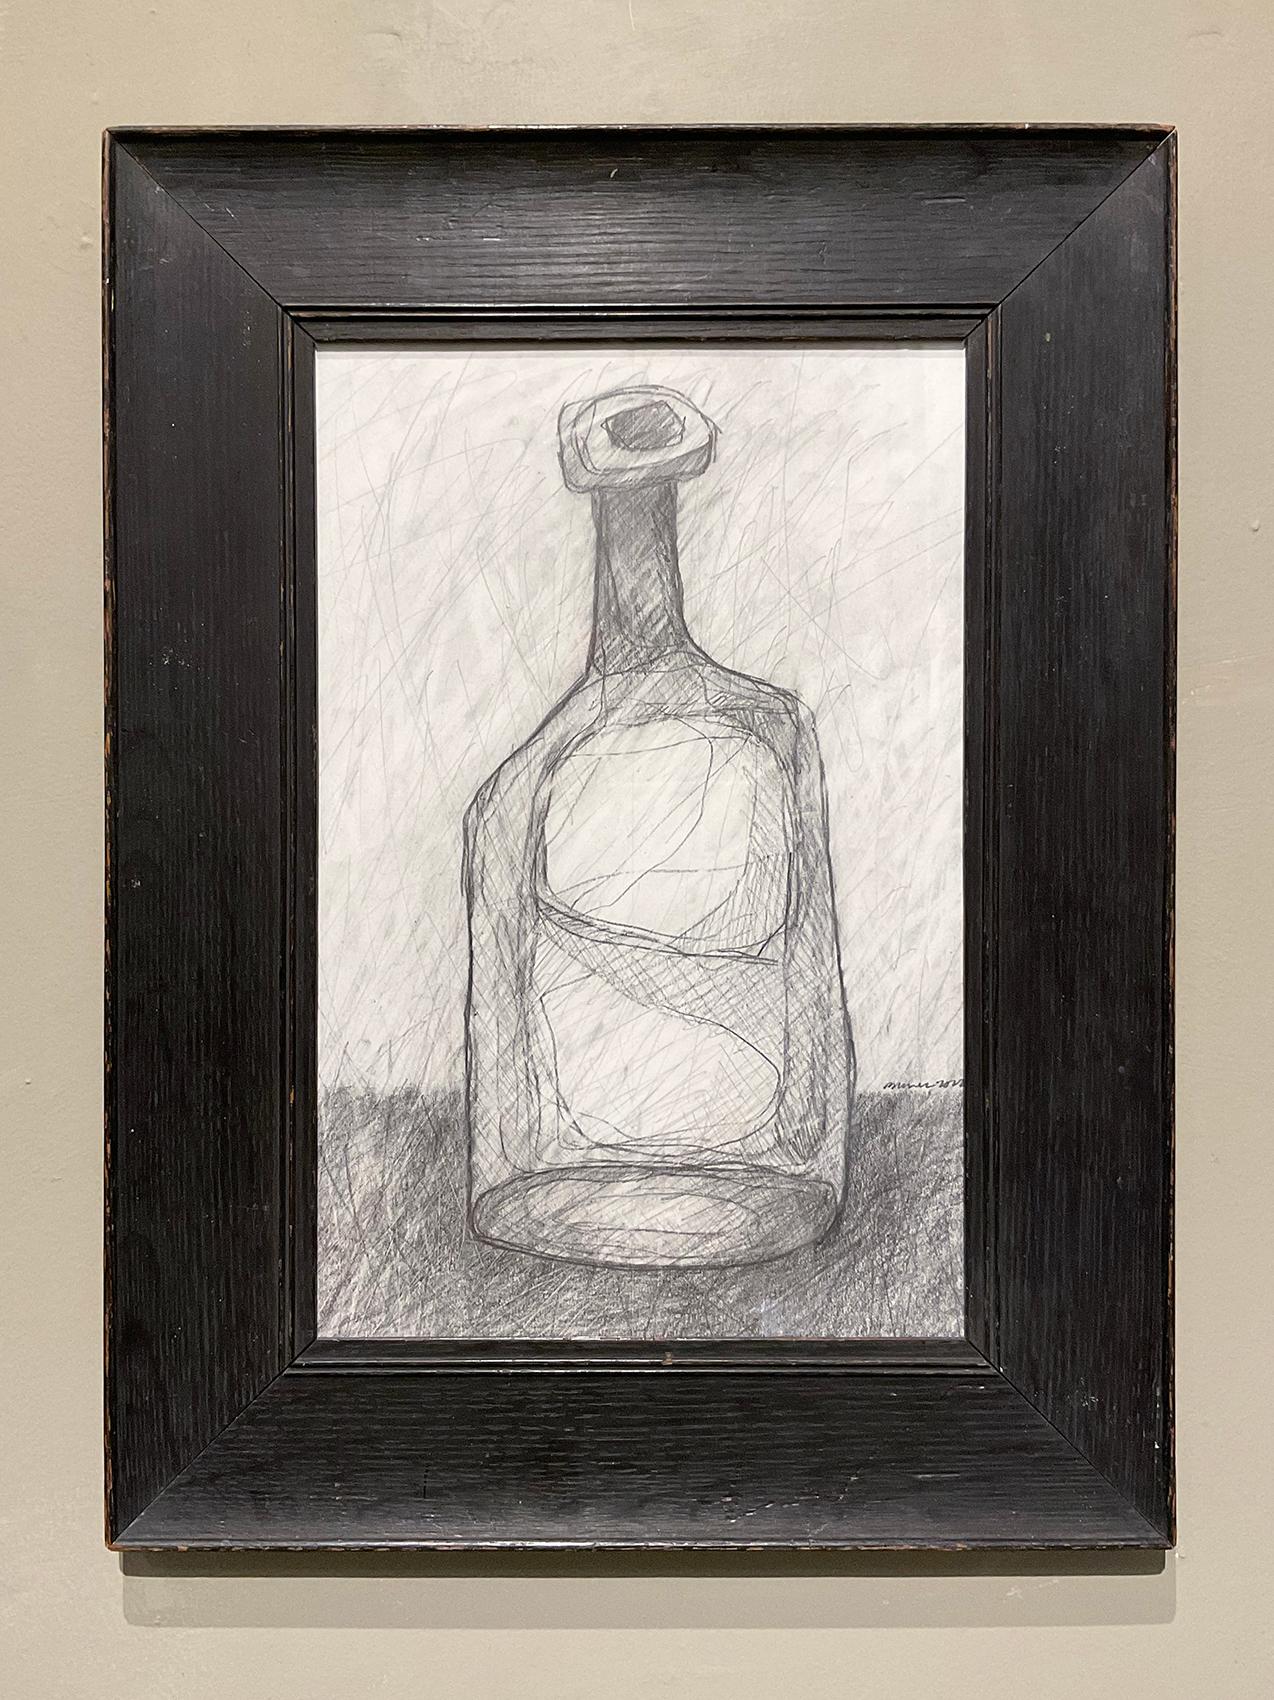 Single Bottle II: Abstract Cubist Style Morandi Bottle Still Life Pencil Drawing - Art by David Dew Bruner